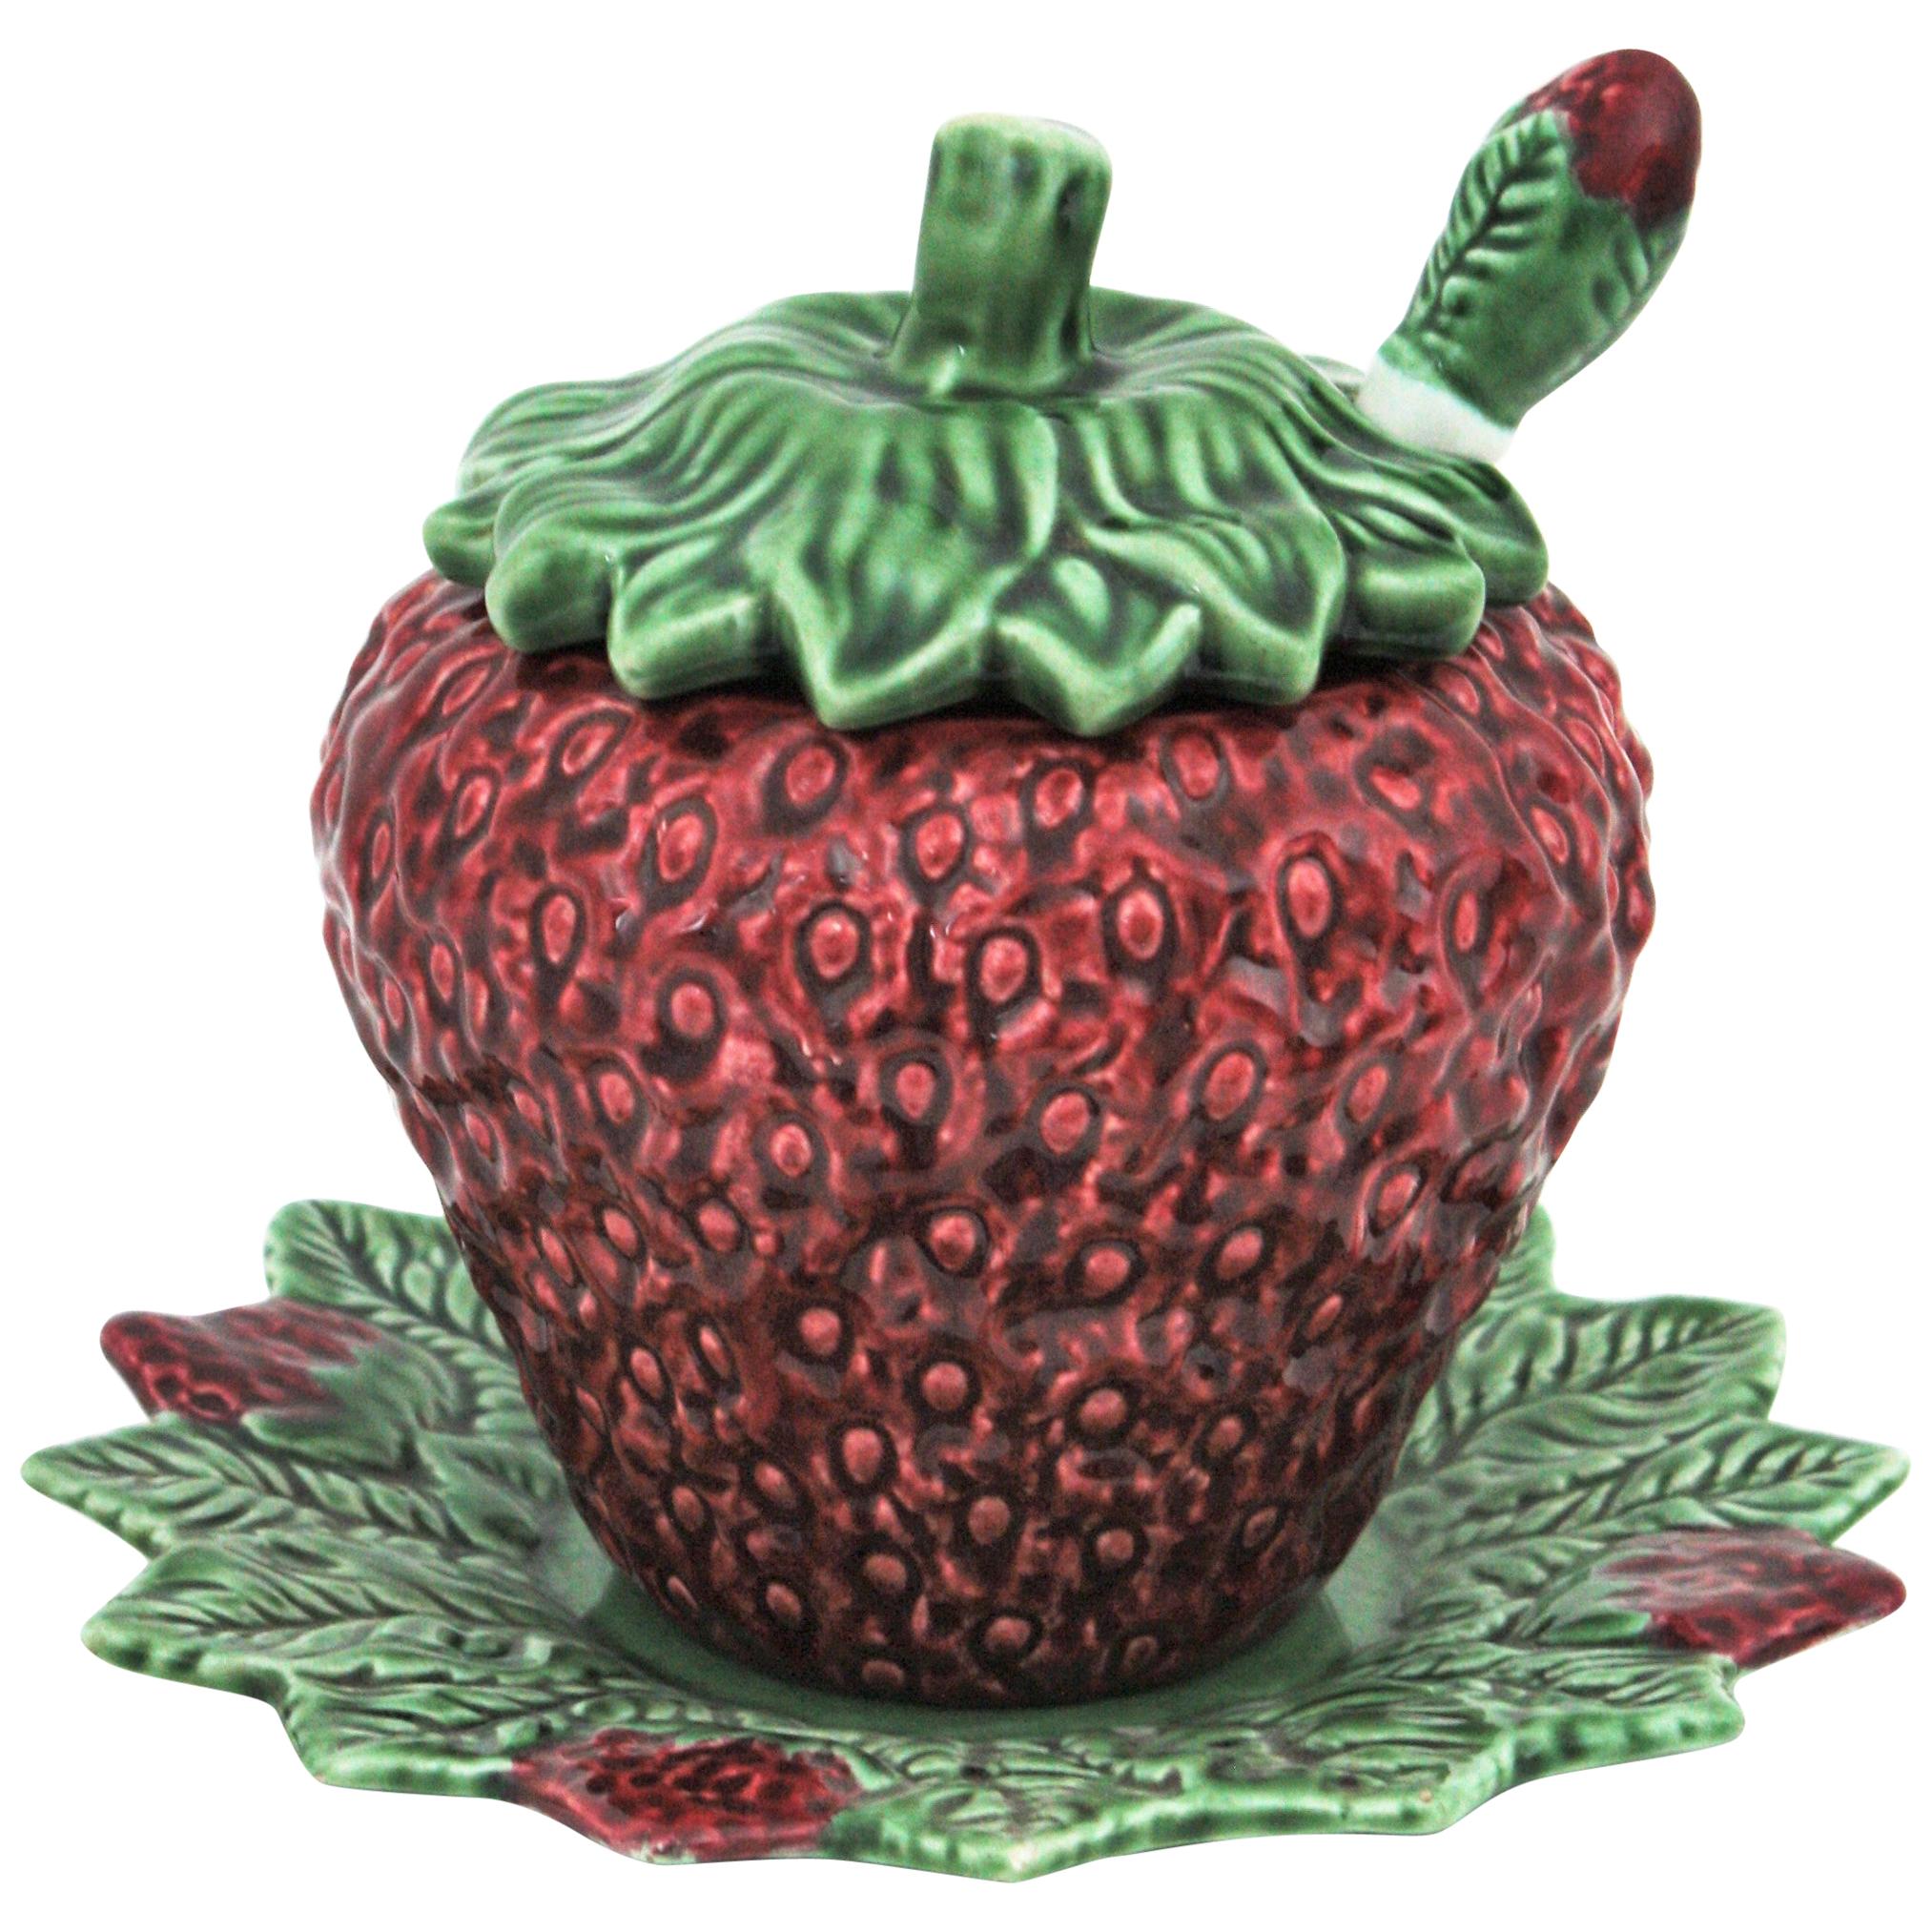 Erdbeerförmige Majolika-Keramik-Terrine von Bordalo Pinheiro